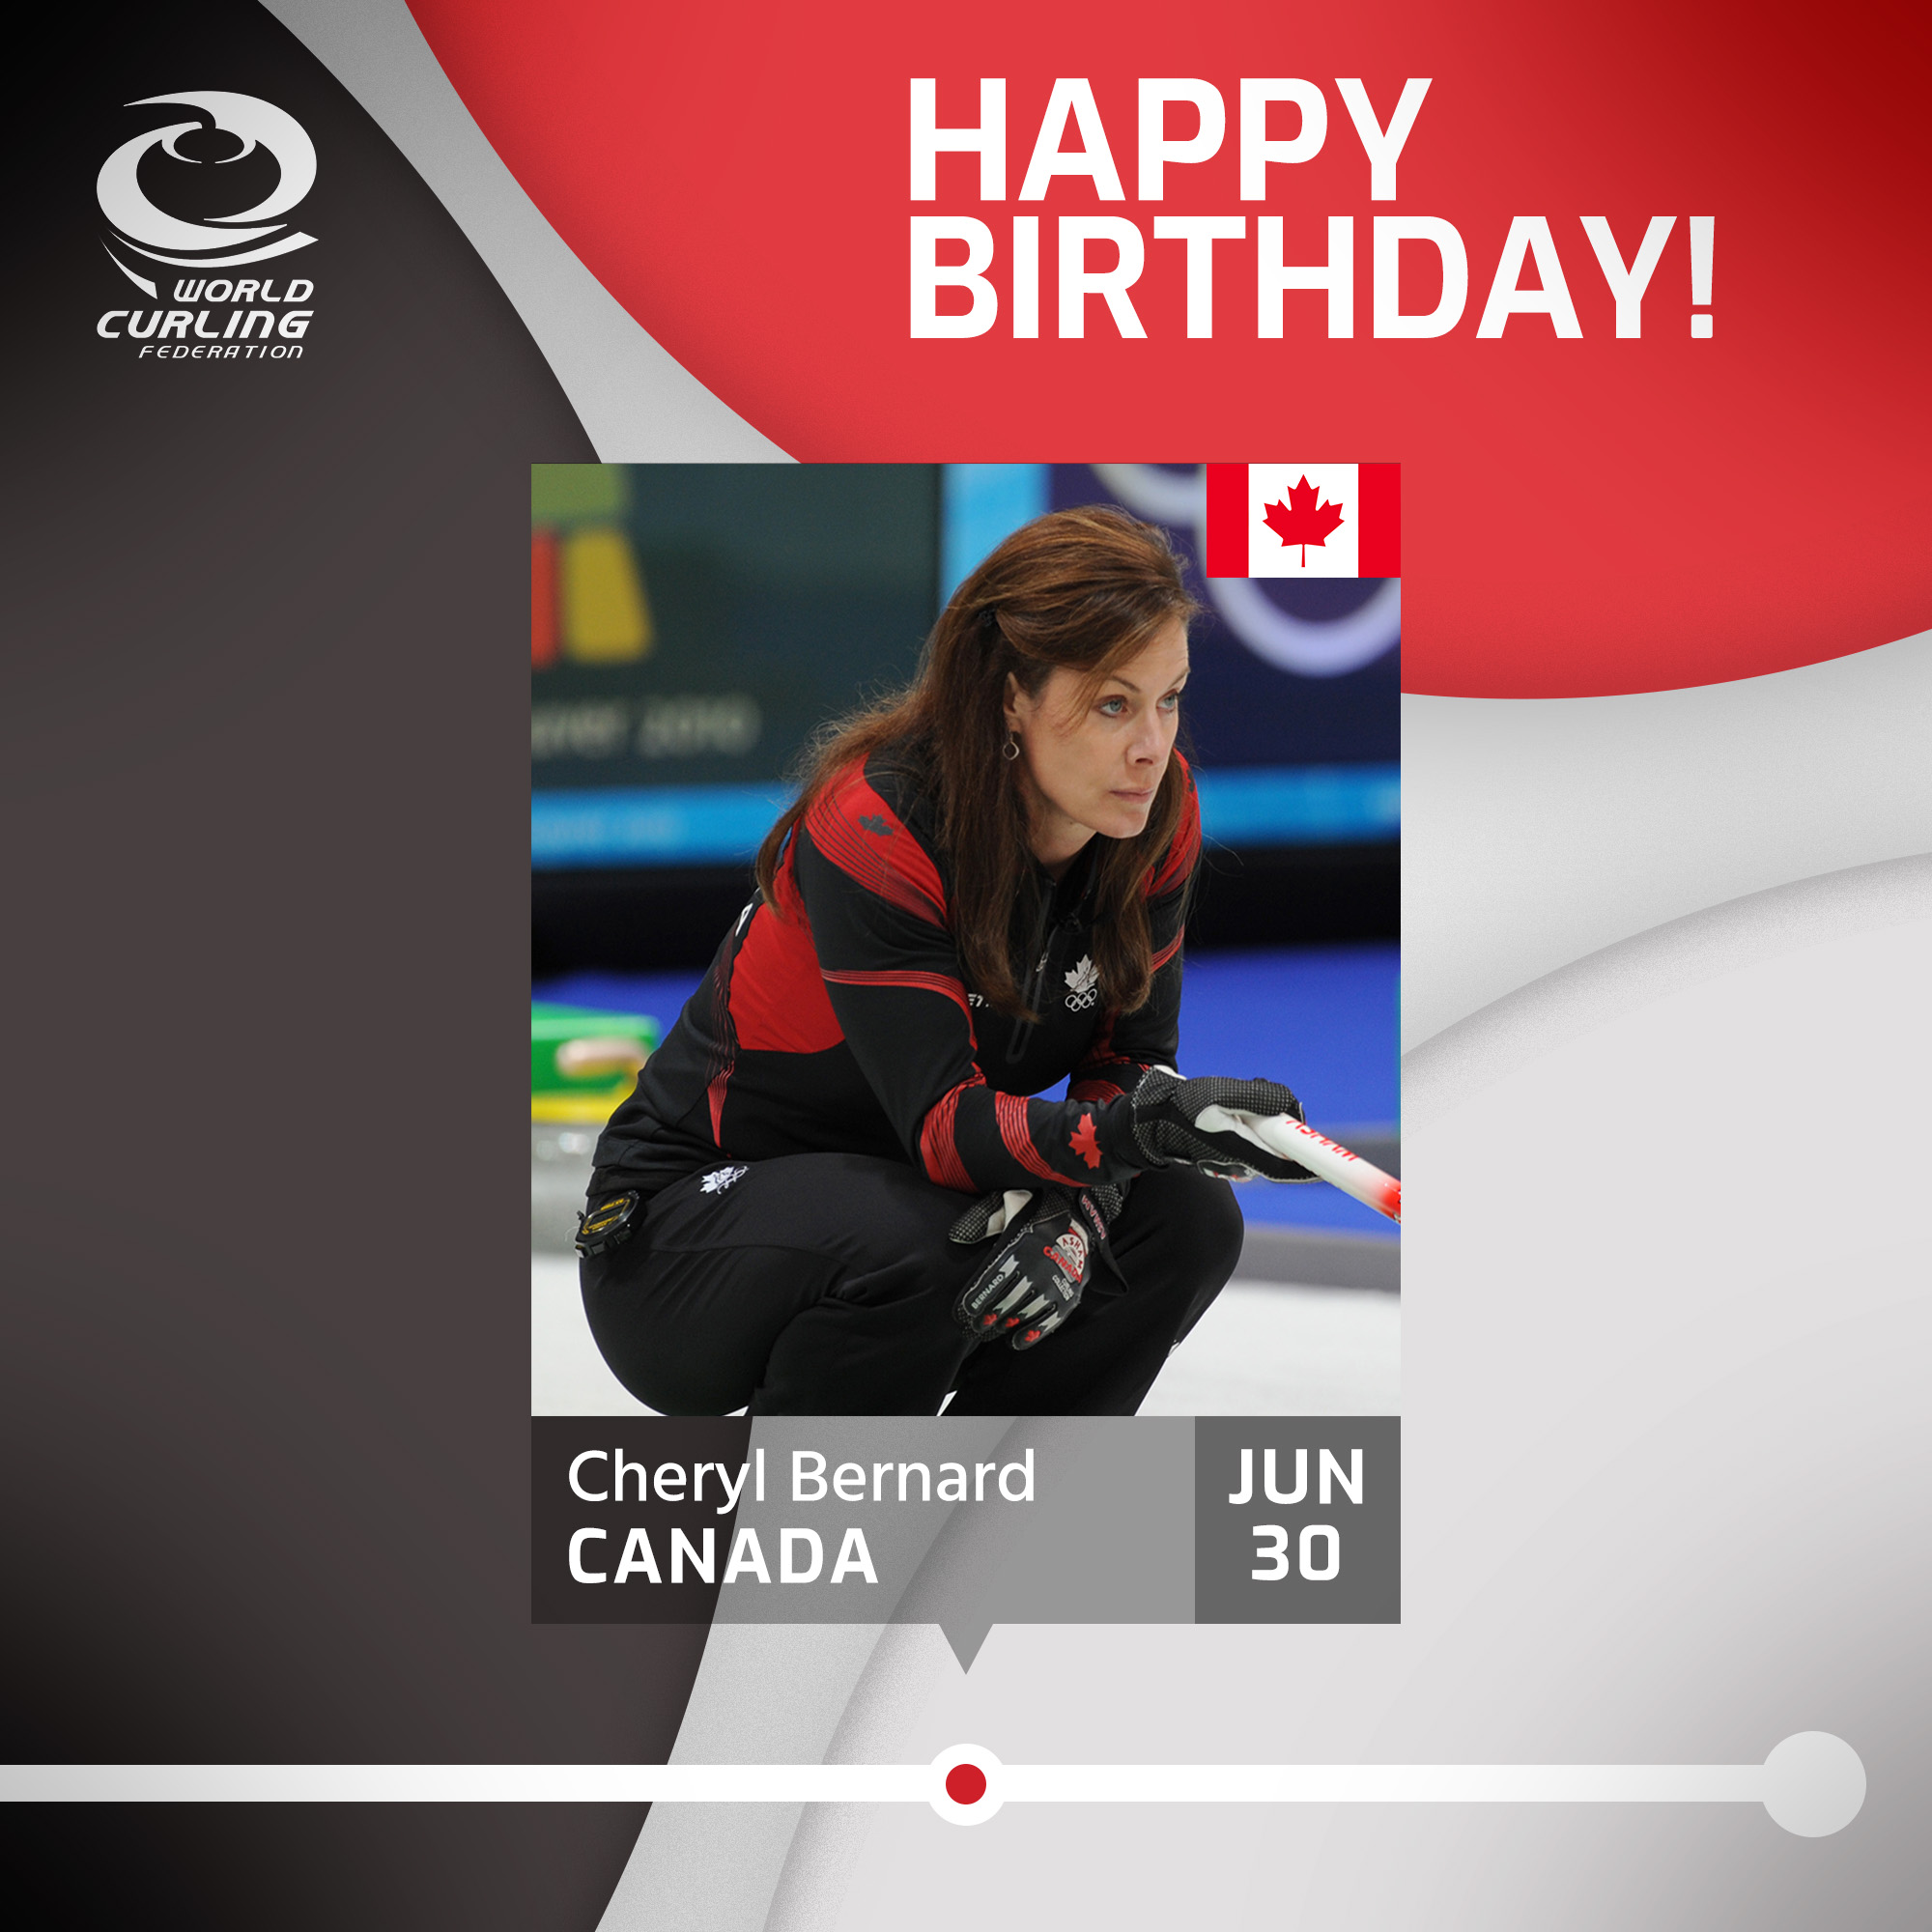 Join us in wishing 2x Olympian, Cheryl Bernard, a very happy birthday!  